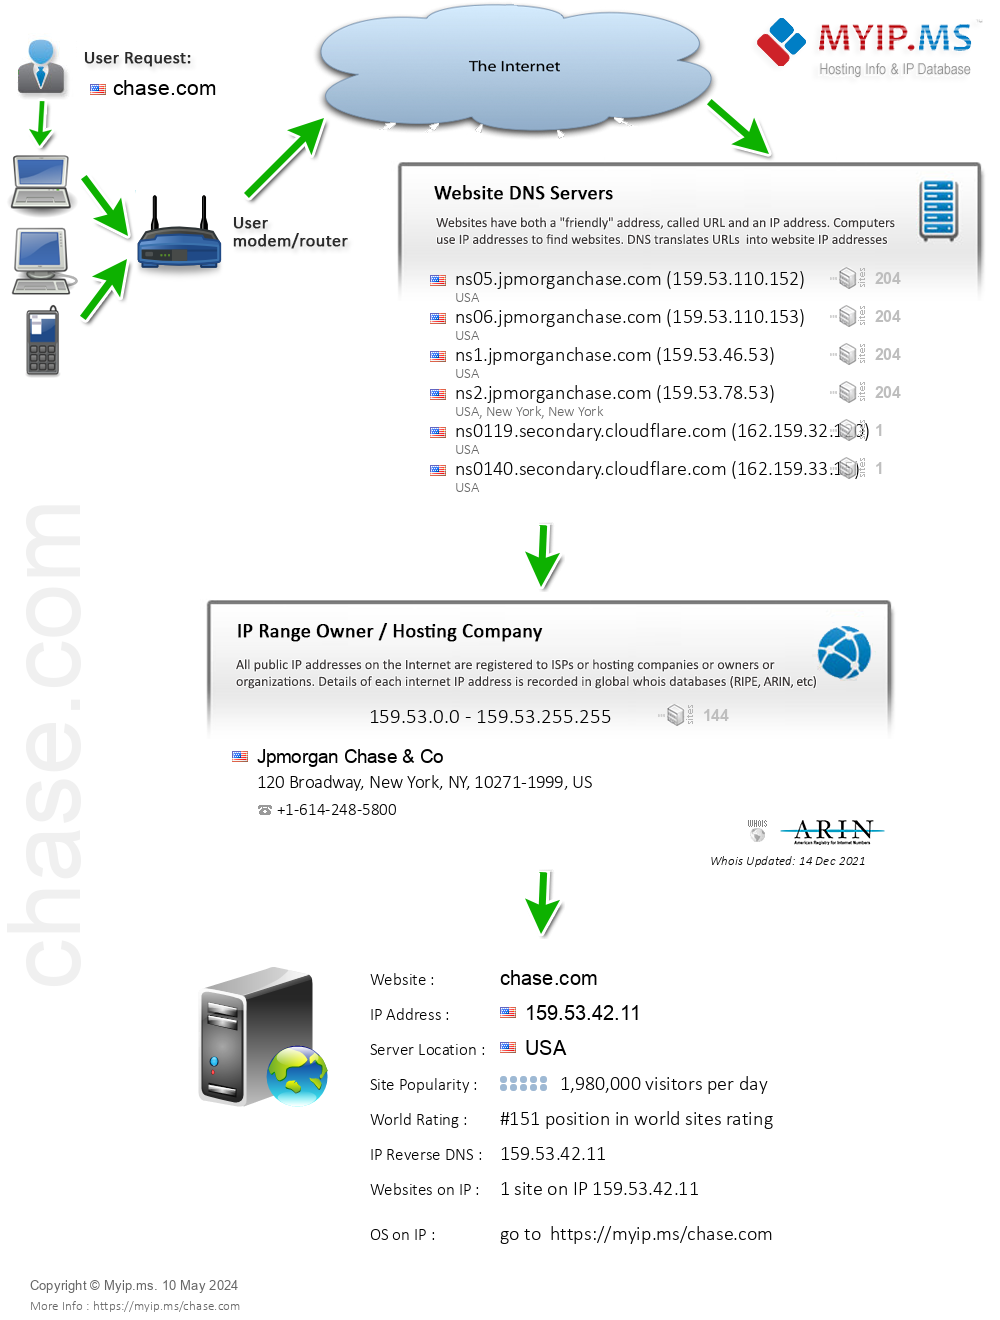 Chase.com - Website Hosting Visual IP Diagram